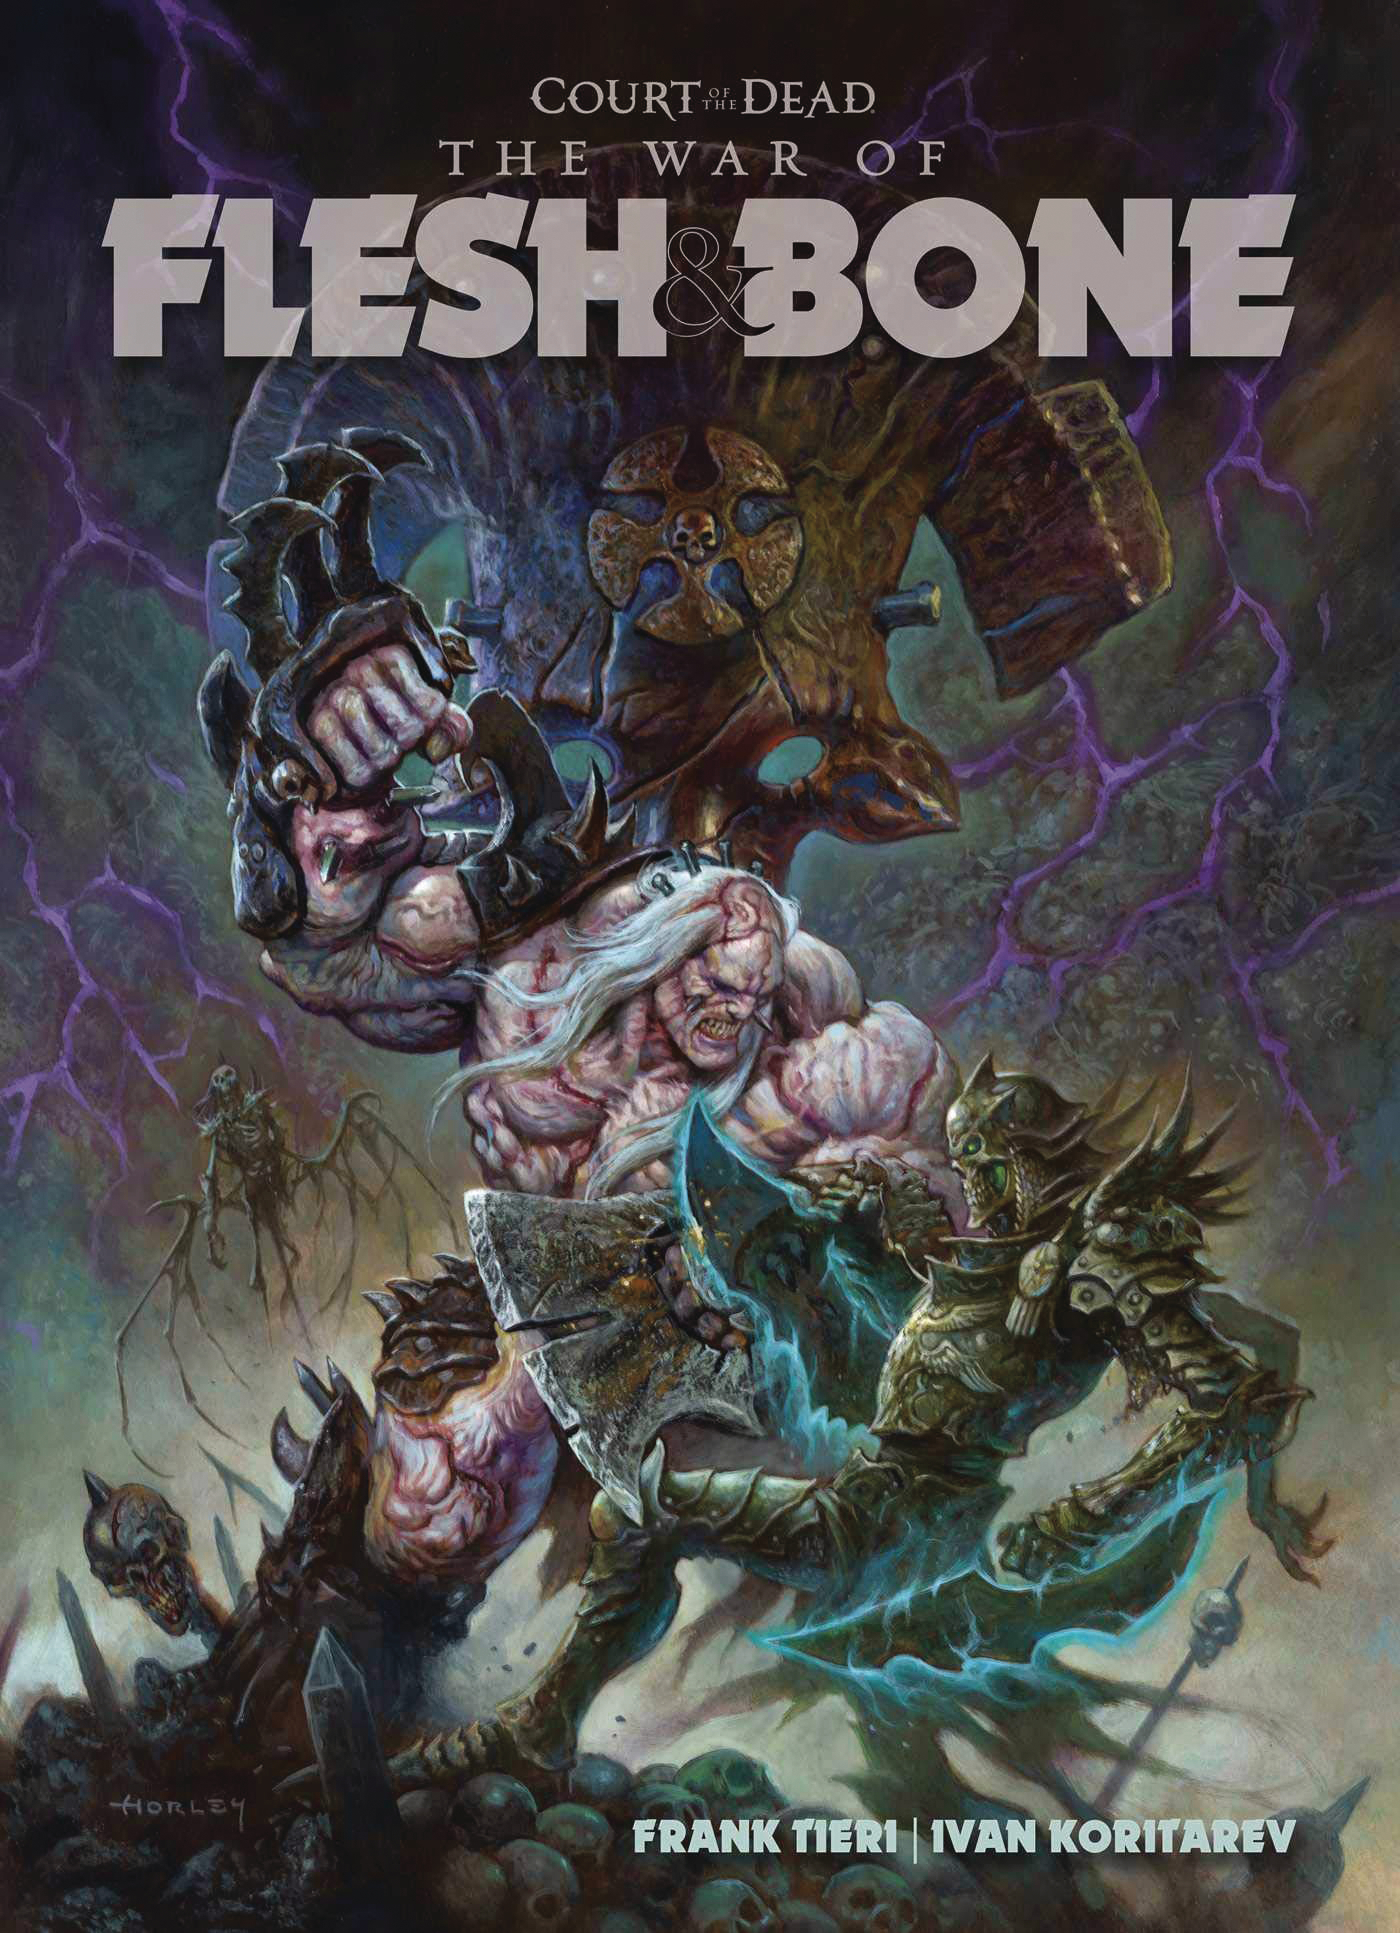 Court of Dead War of Flesh & Bone Graphic Novel